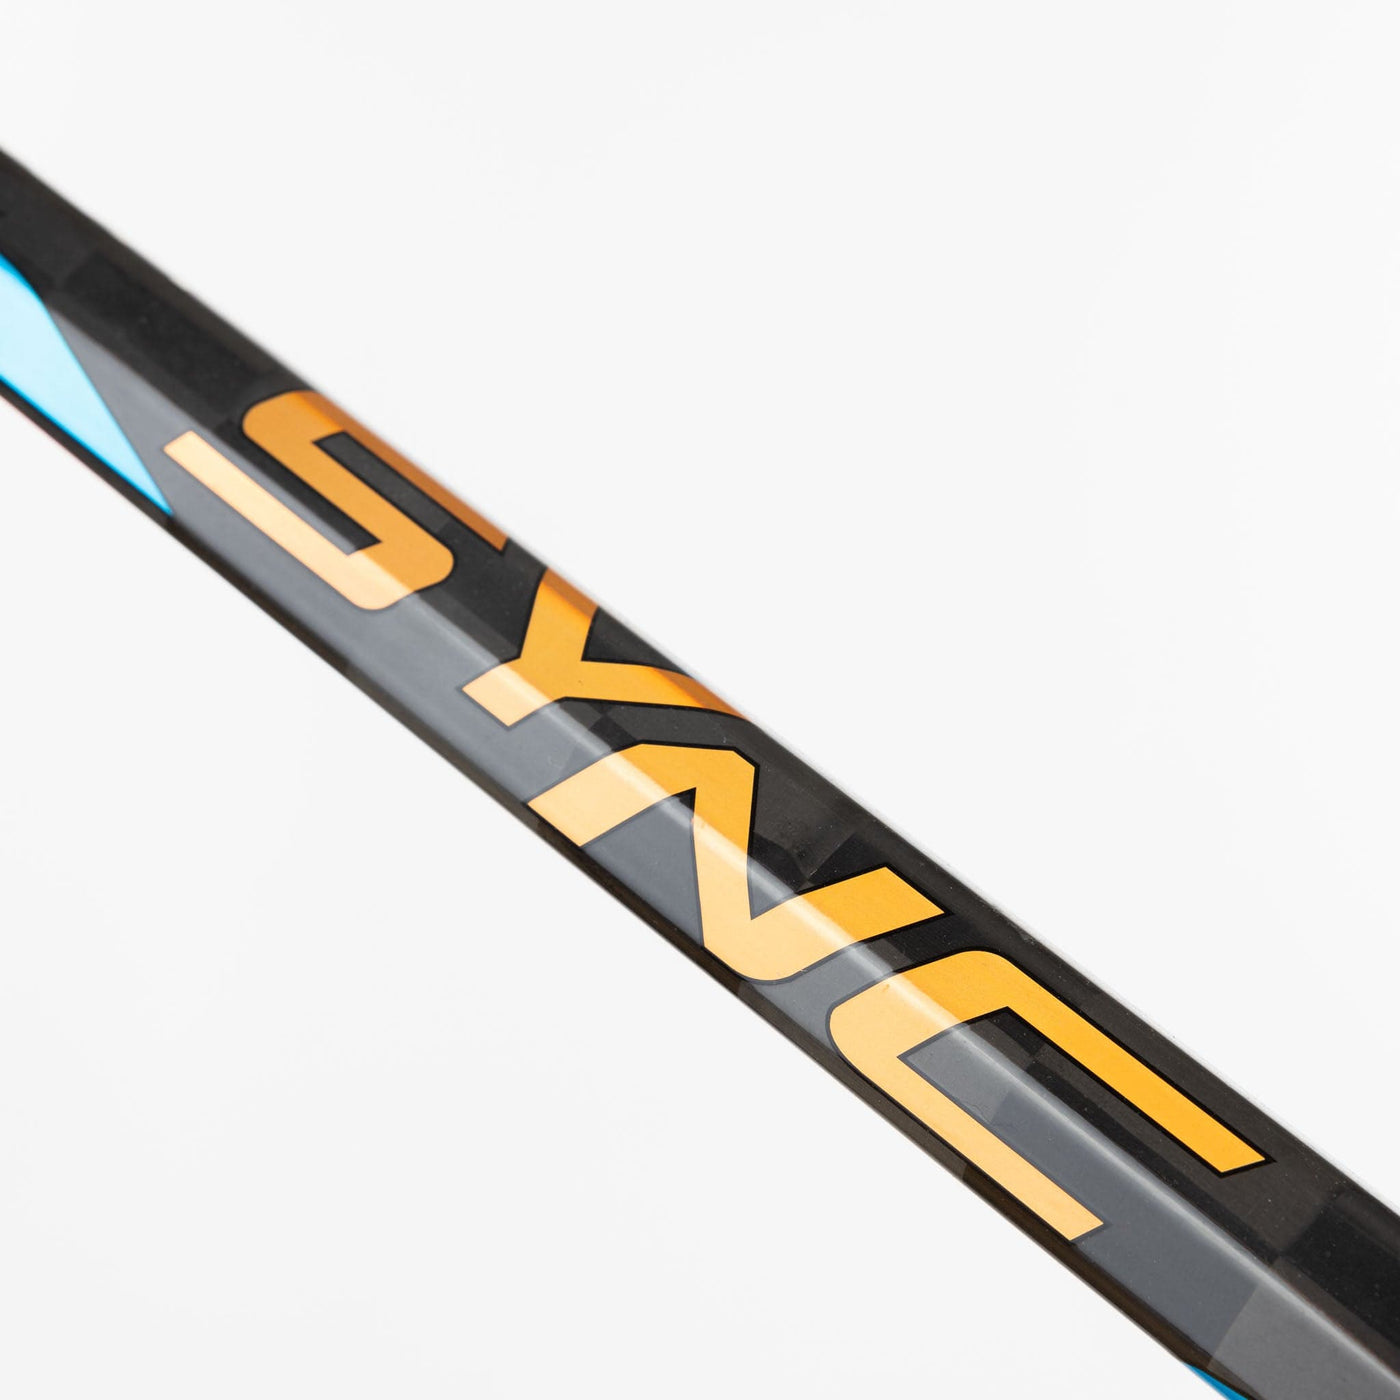 Bauer Nexus SYNC Senior Hockey Stick - The Hockey Shop Source For Sports